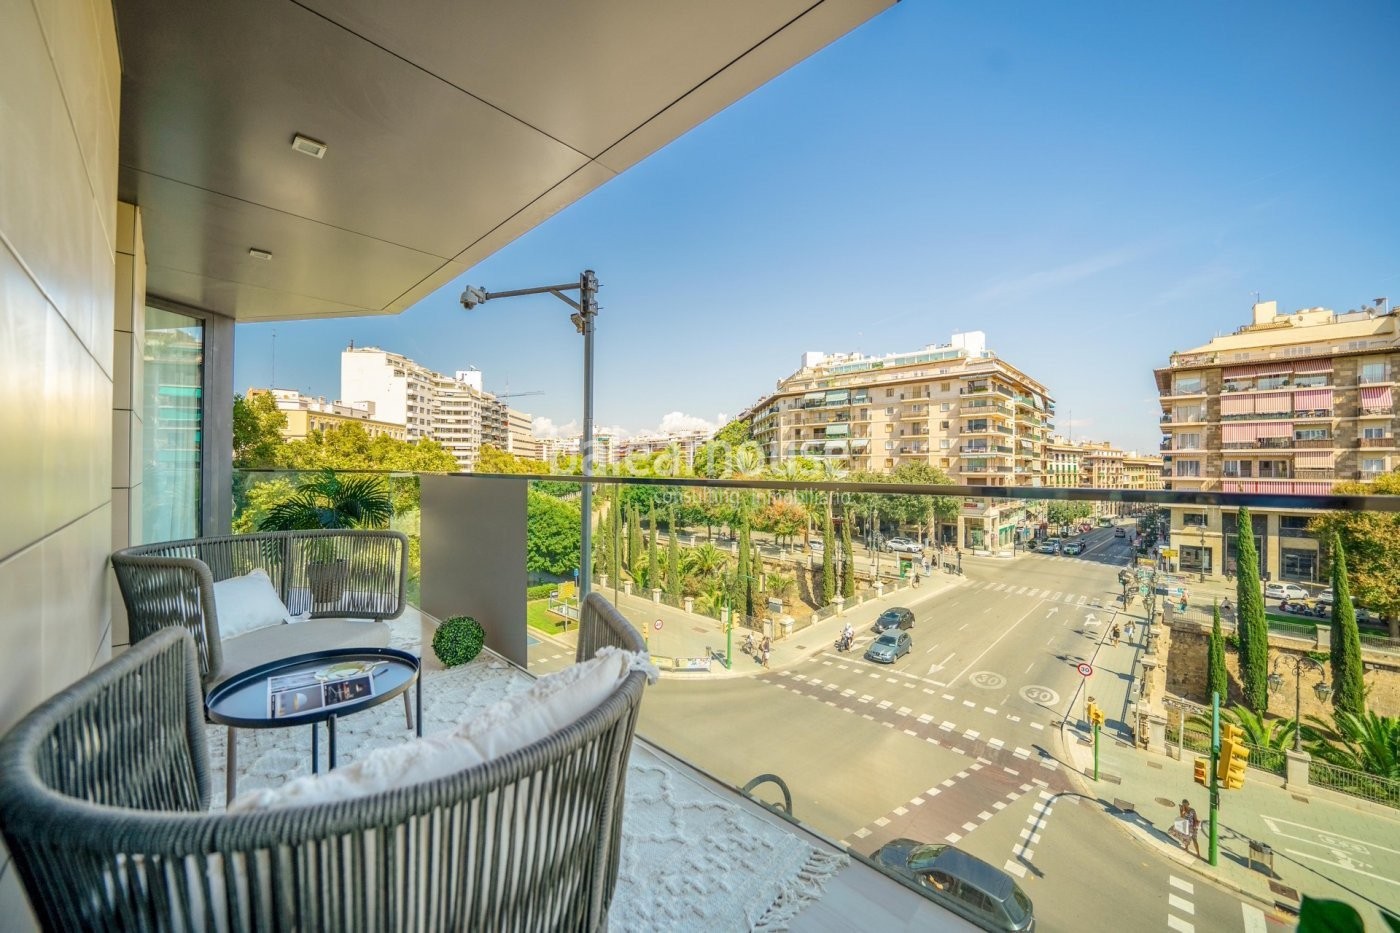 Elegancia llena de luz en este gran piso con terraza que se asoma al centro del Paseo Mallorca.